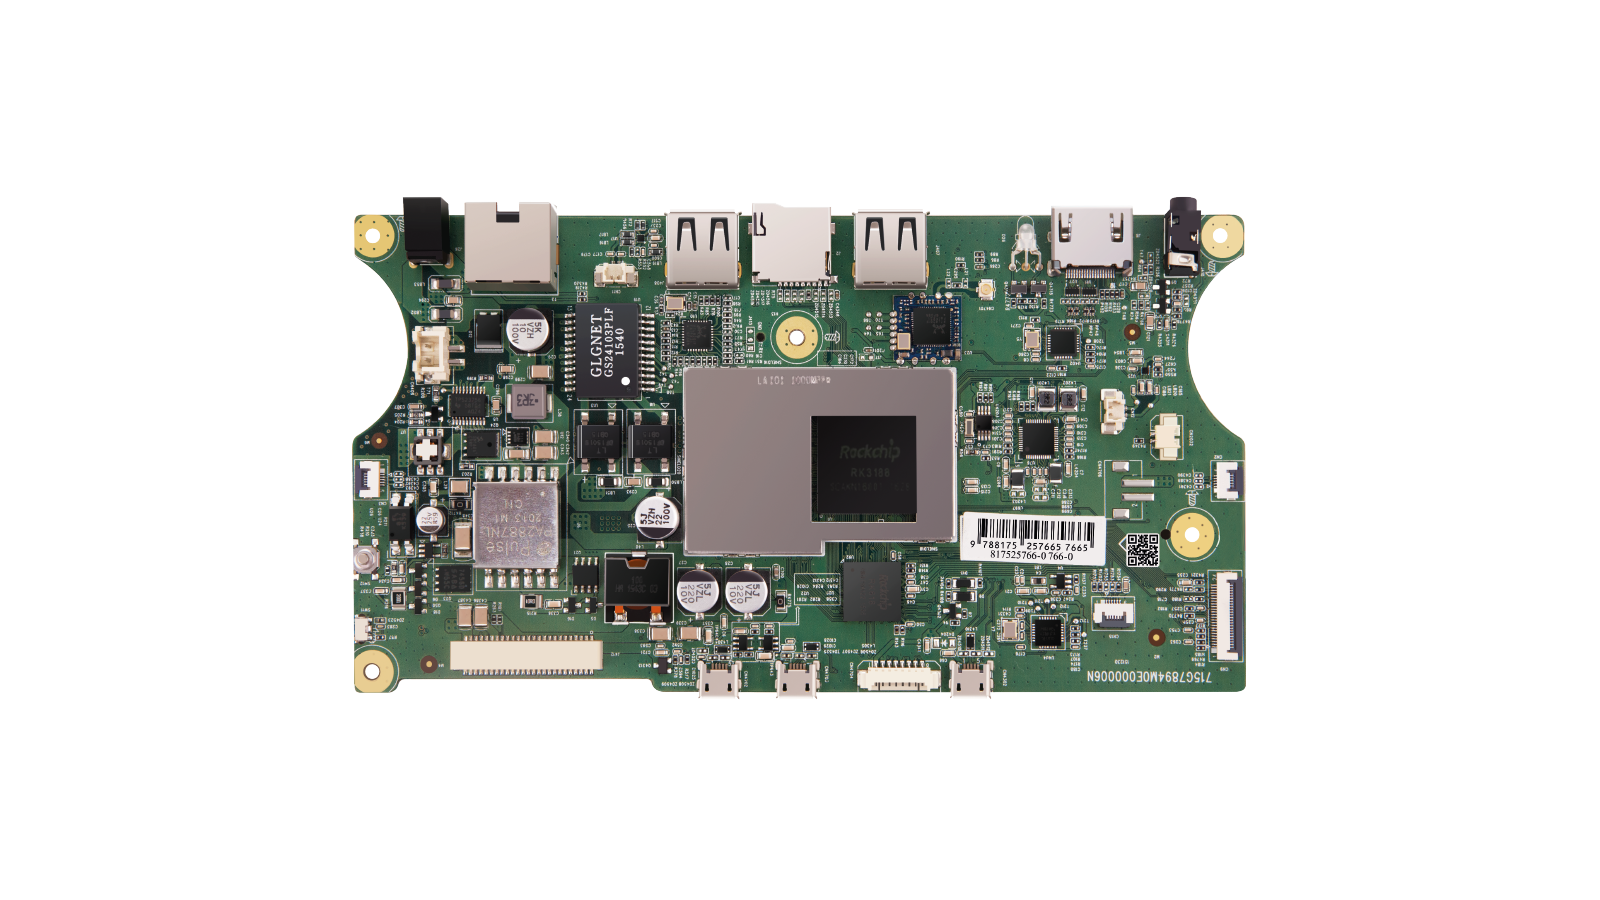 LV-Tron LVB-3566-1 embedded board using Rockchip RK-3566 chipset